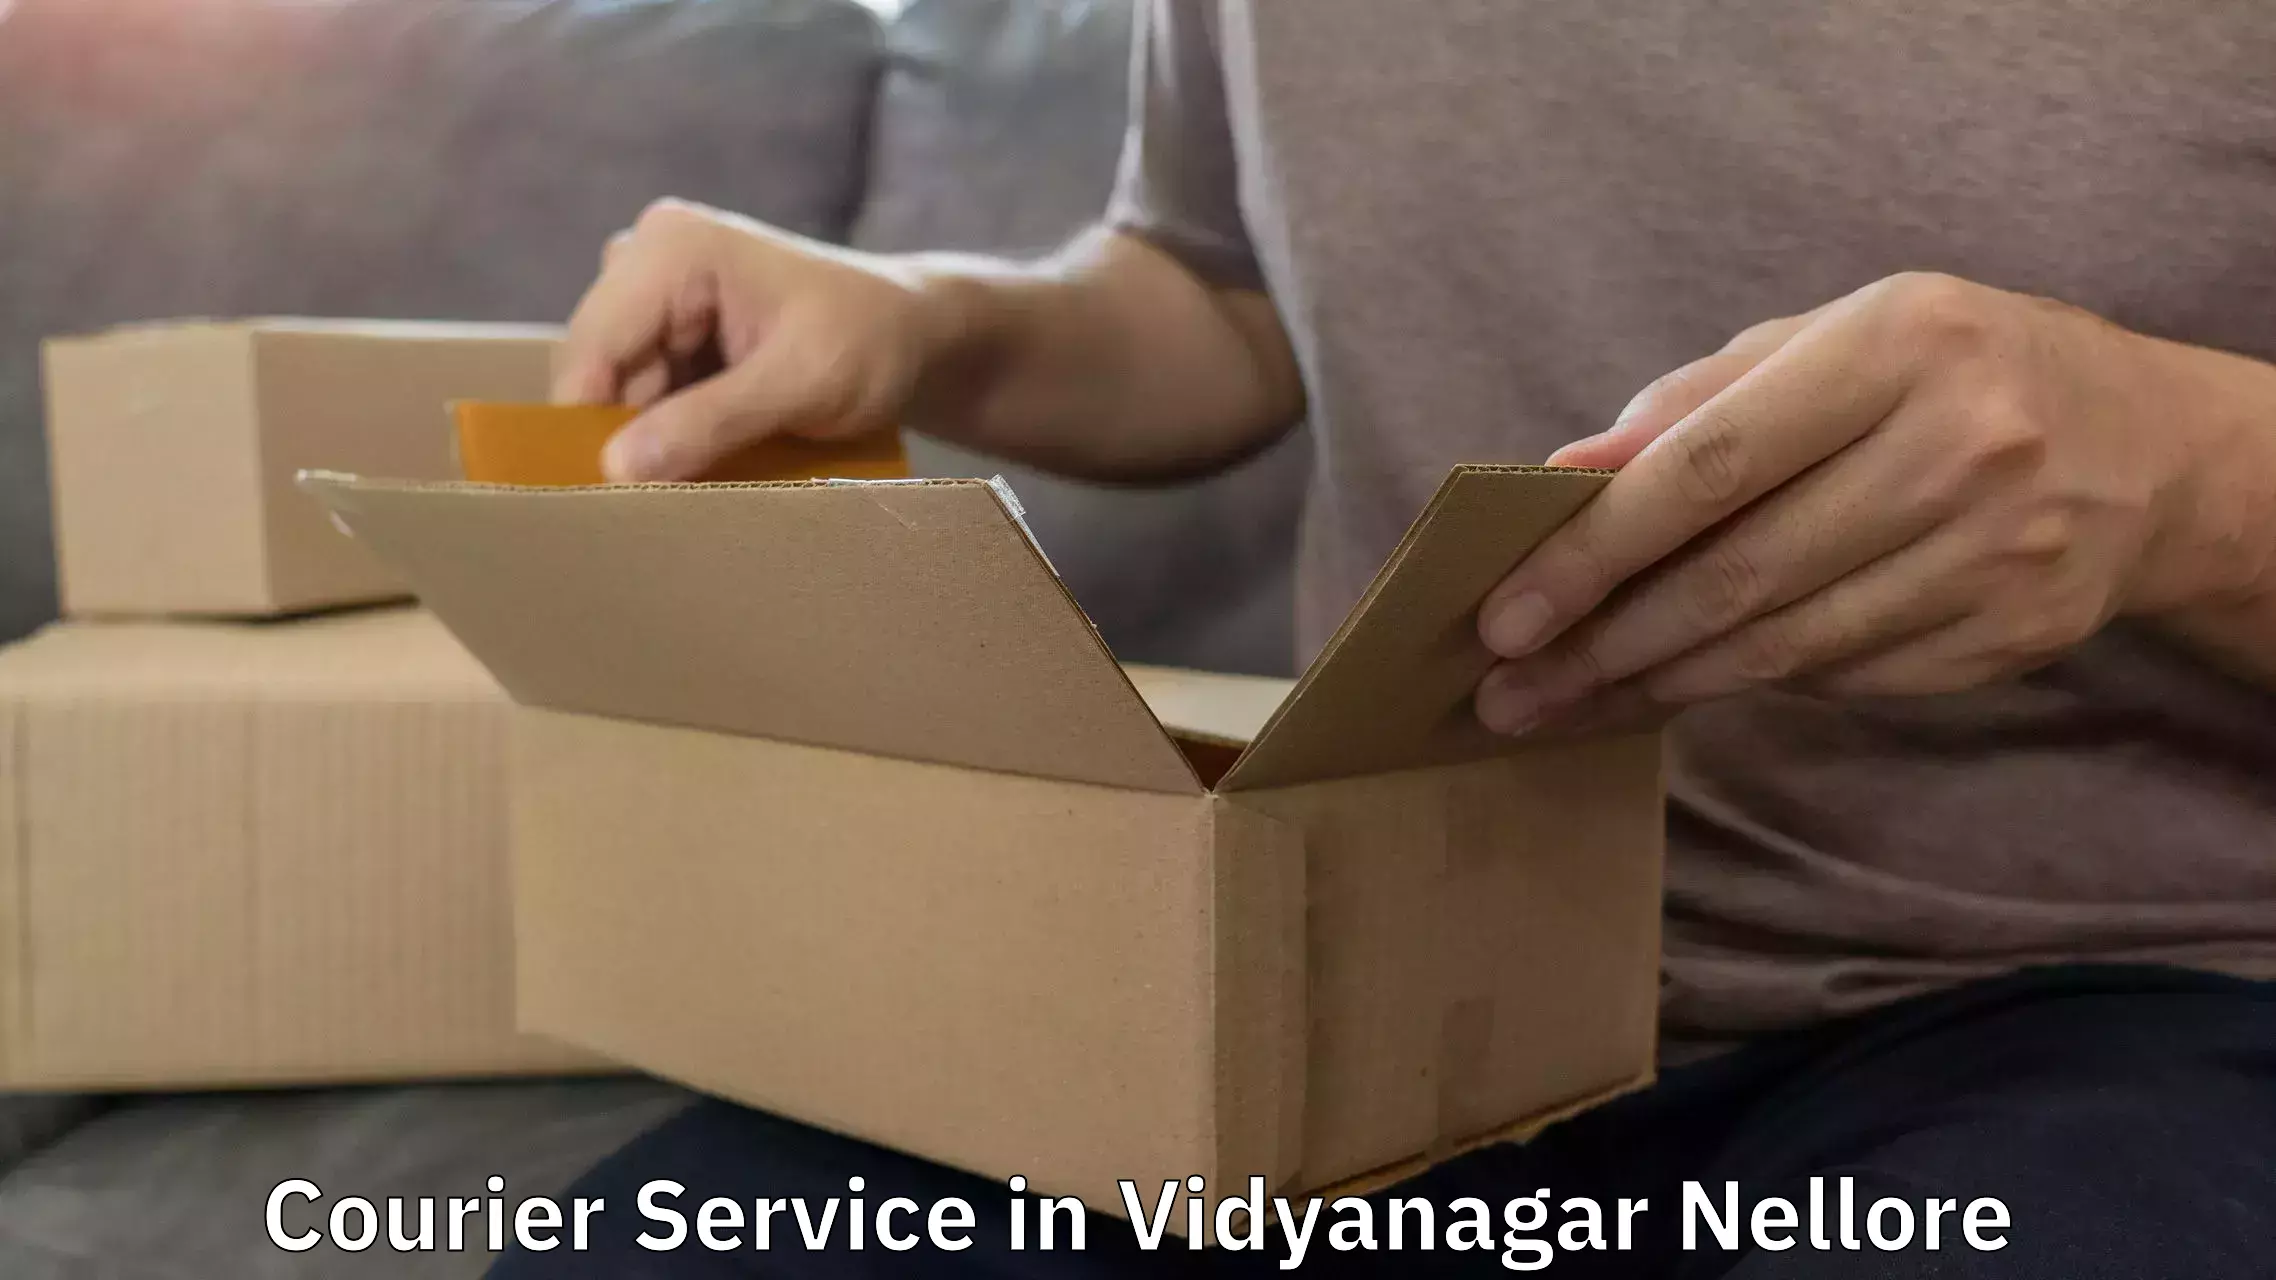 Seamless shipping experience in Vidyanagar Nellore